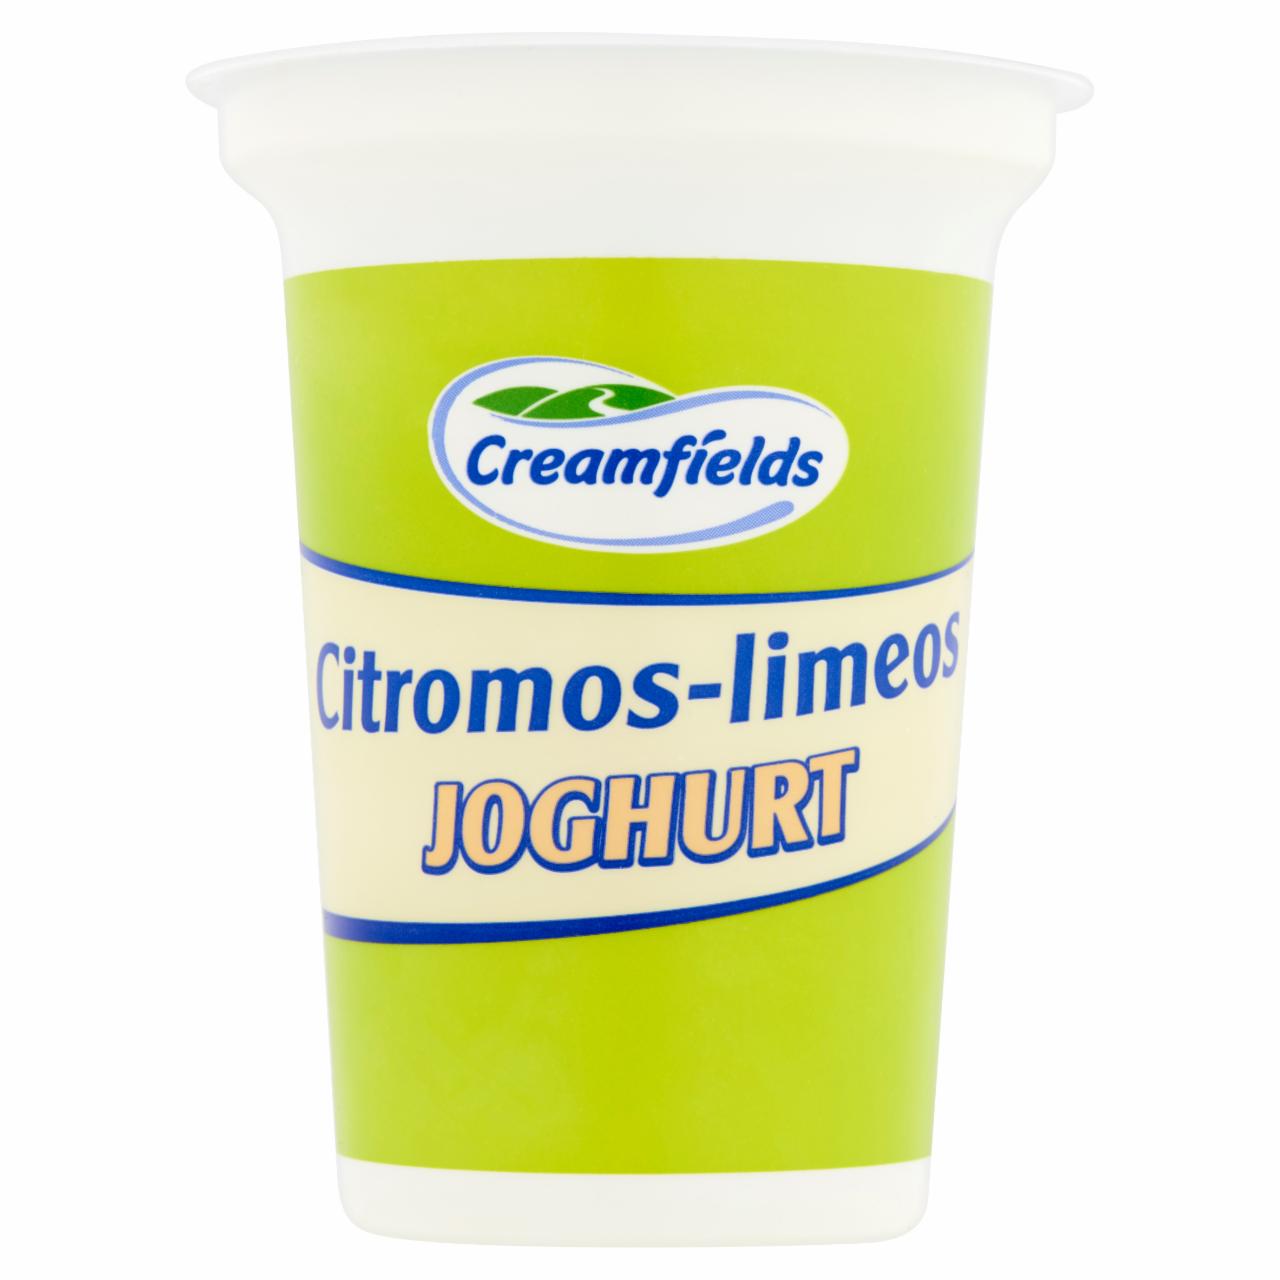 Képek - Creamfields citromos-limeos joghurt 375 g